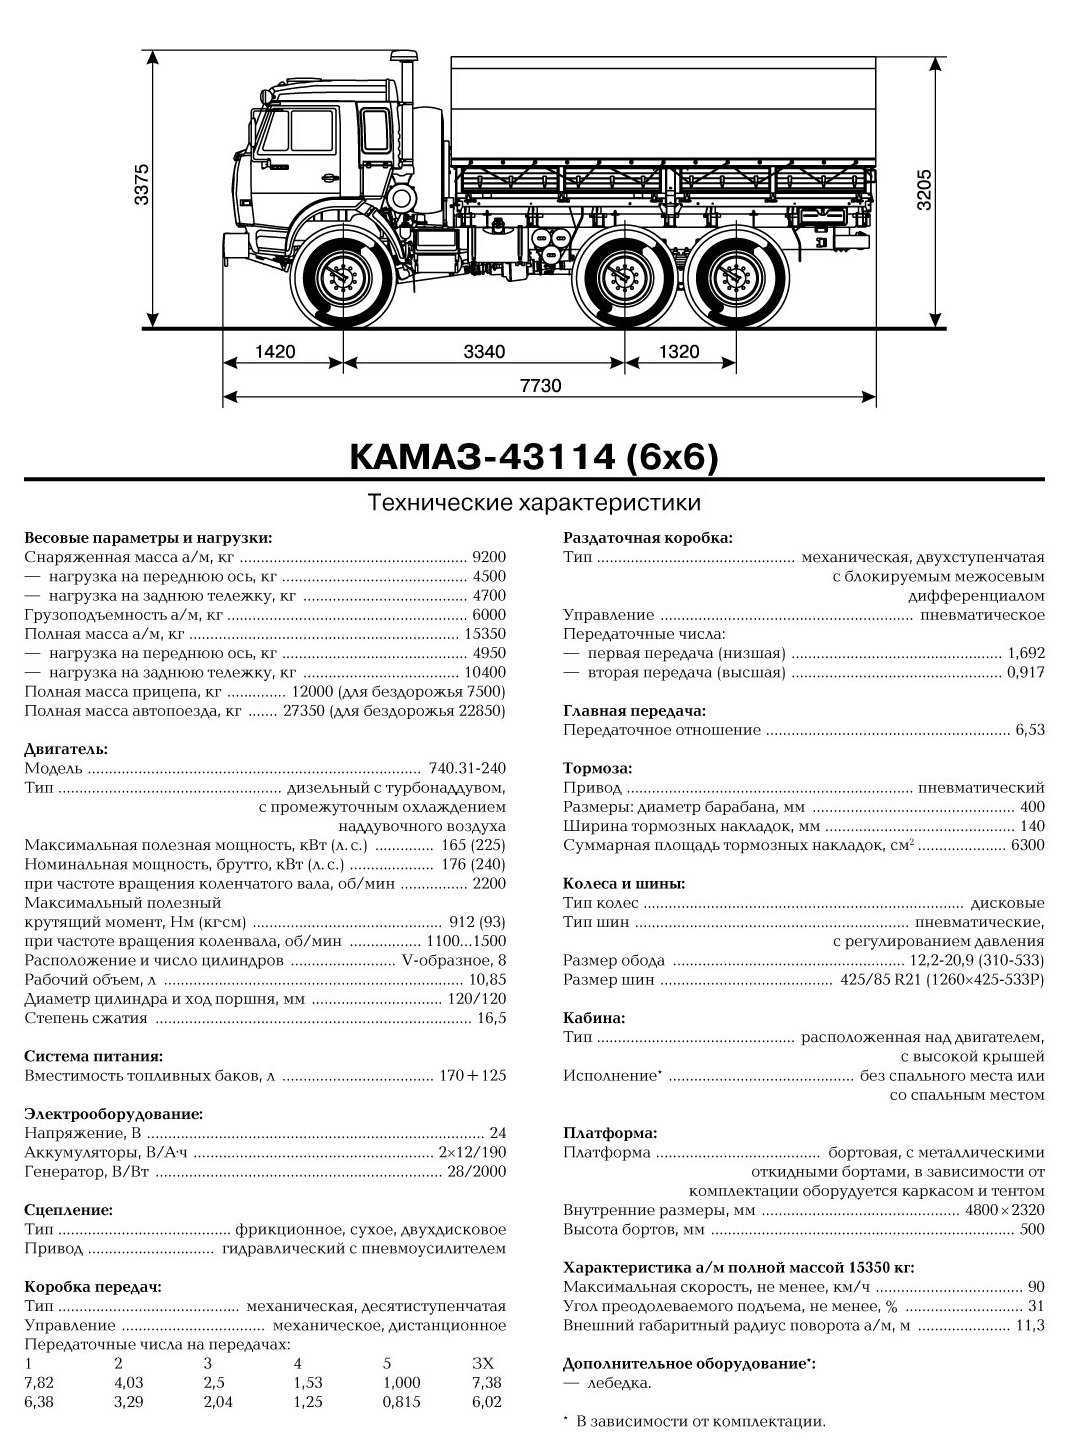 Камаз-53215 характеристика бортового автомобиля